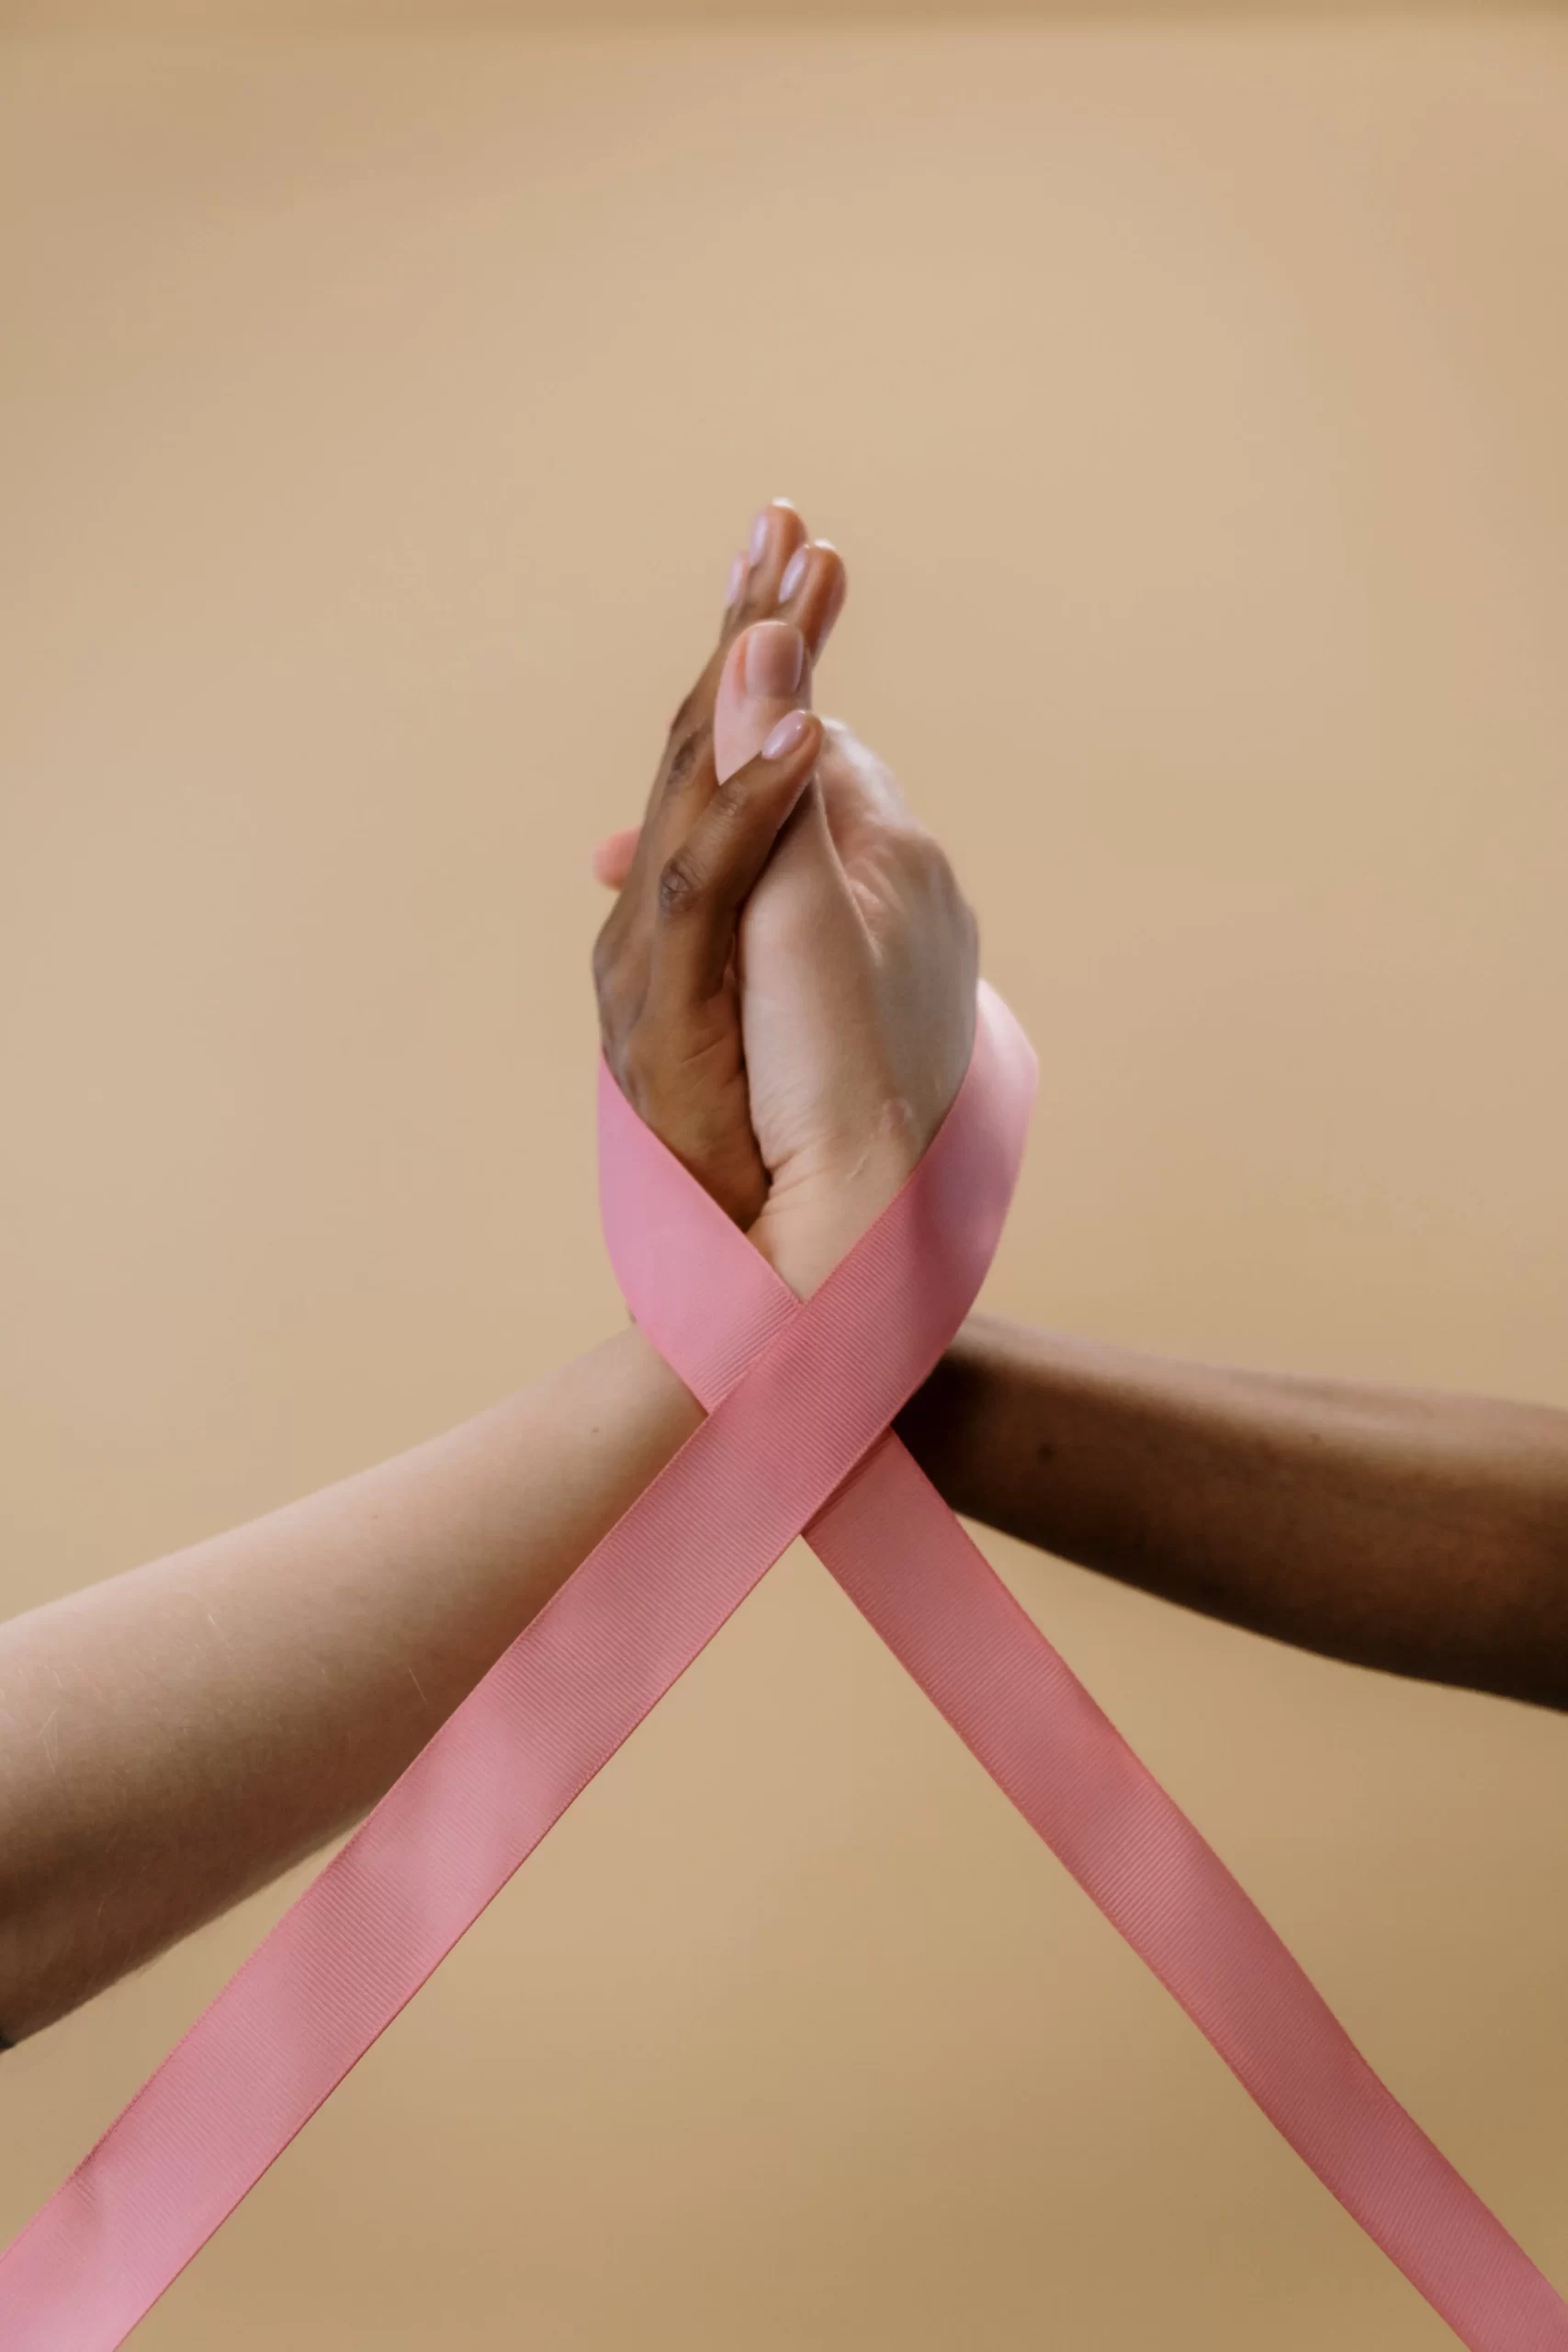 Imagen representativa del Dia mundial contra el cáncer